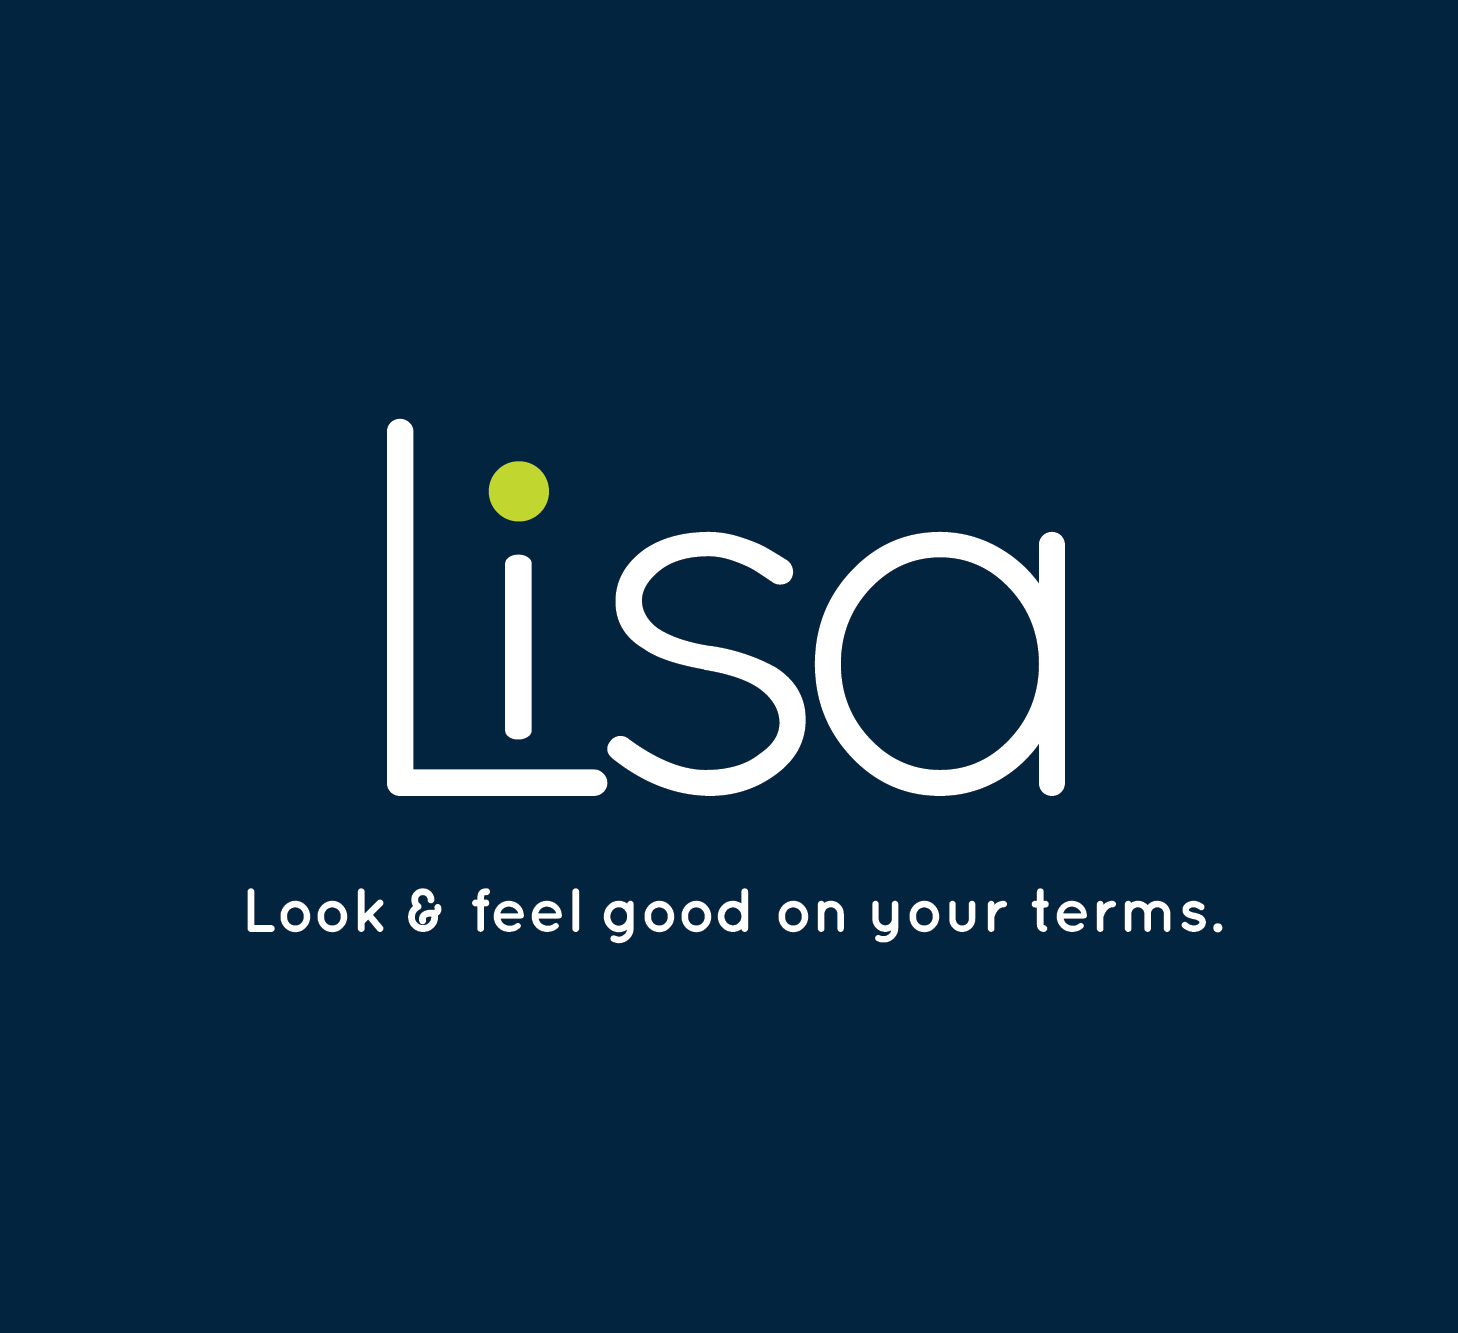 The LISA App